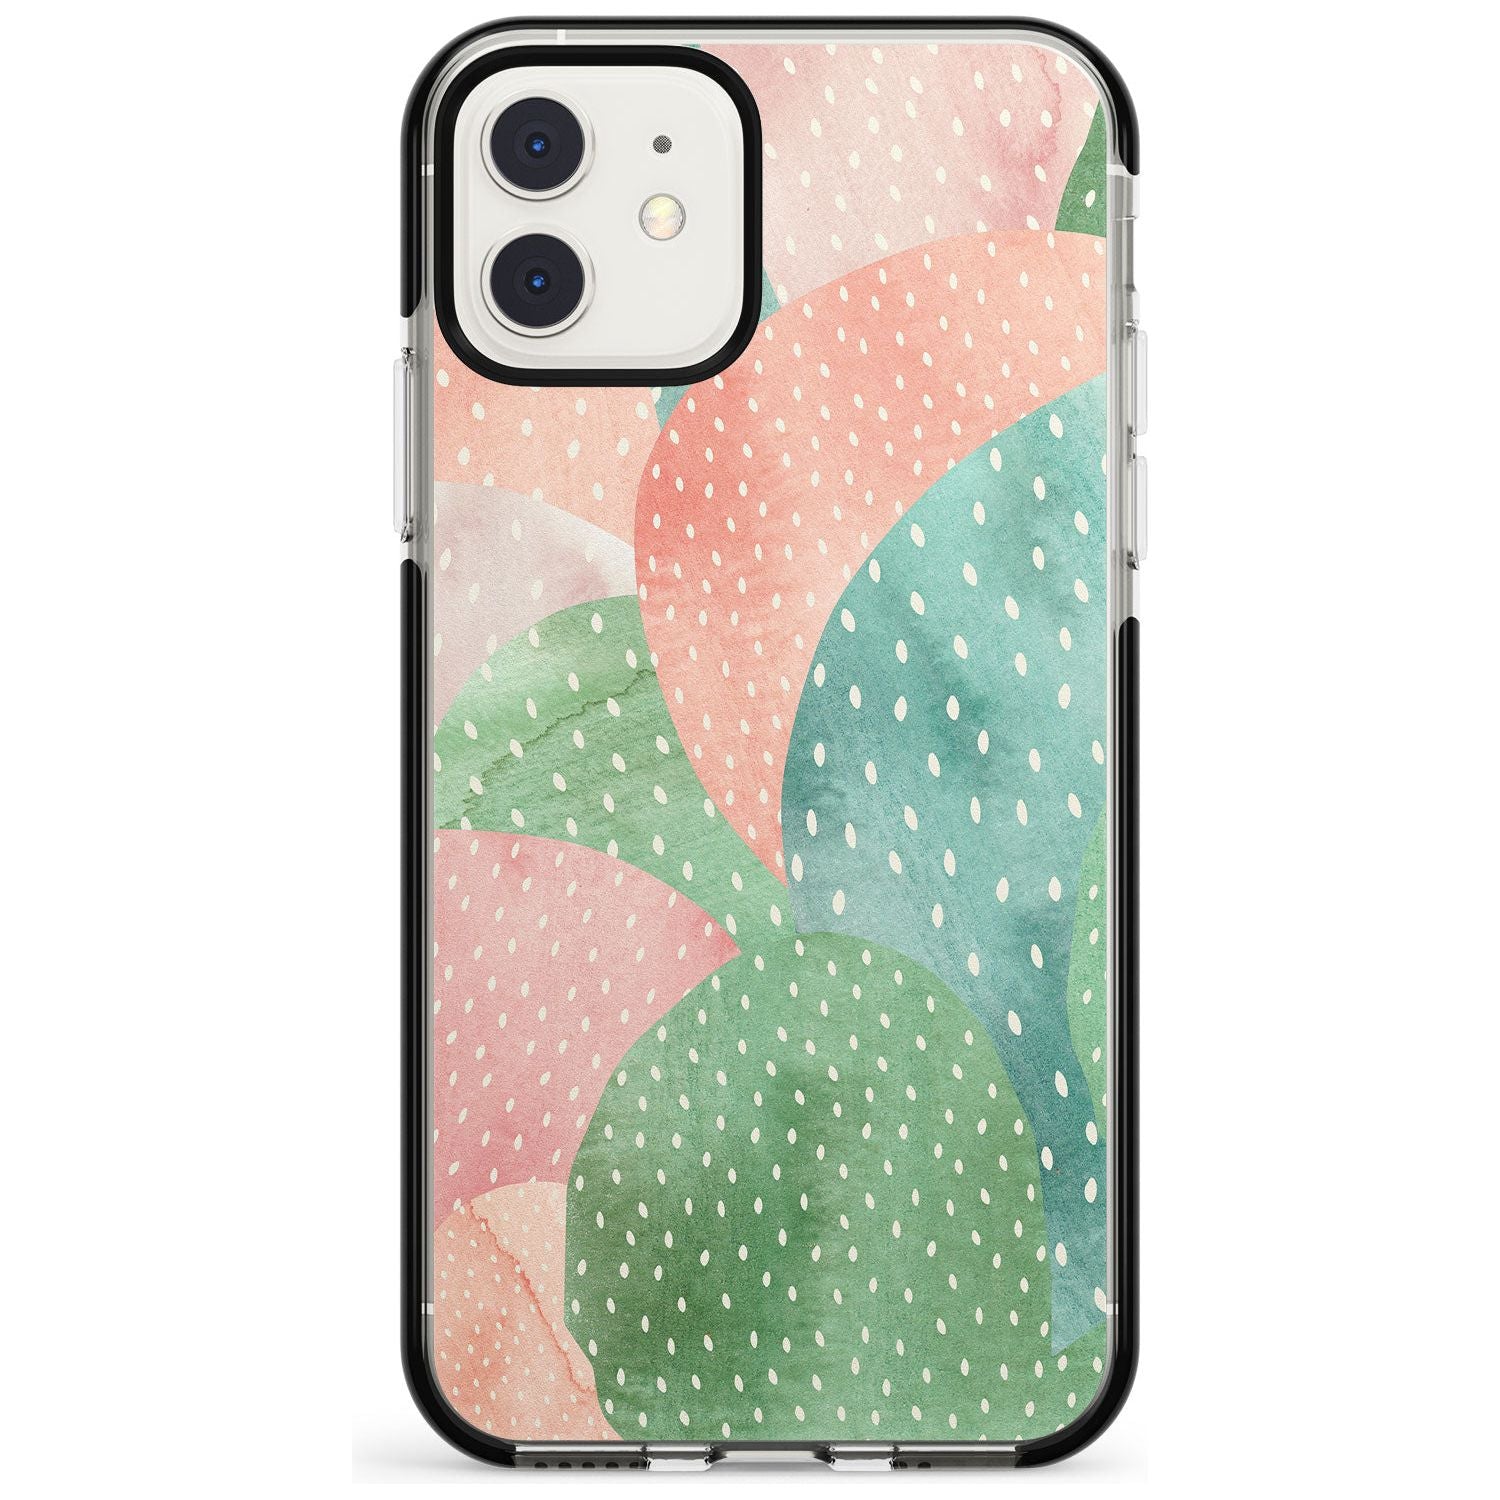 Colourful Close-Up Cacti Design Black Impact Phone Case for iPhone 11